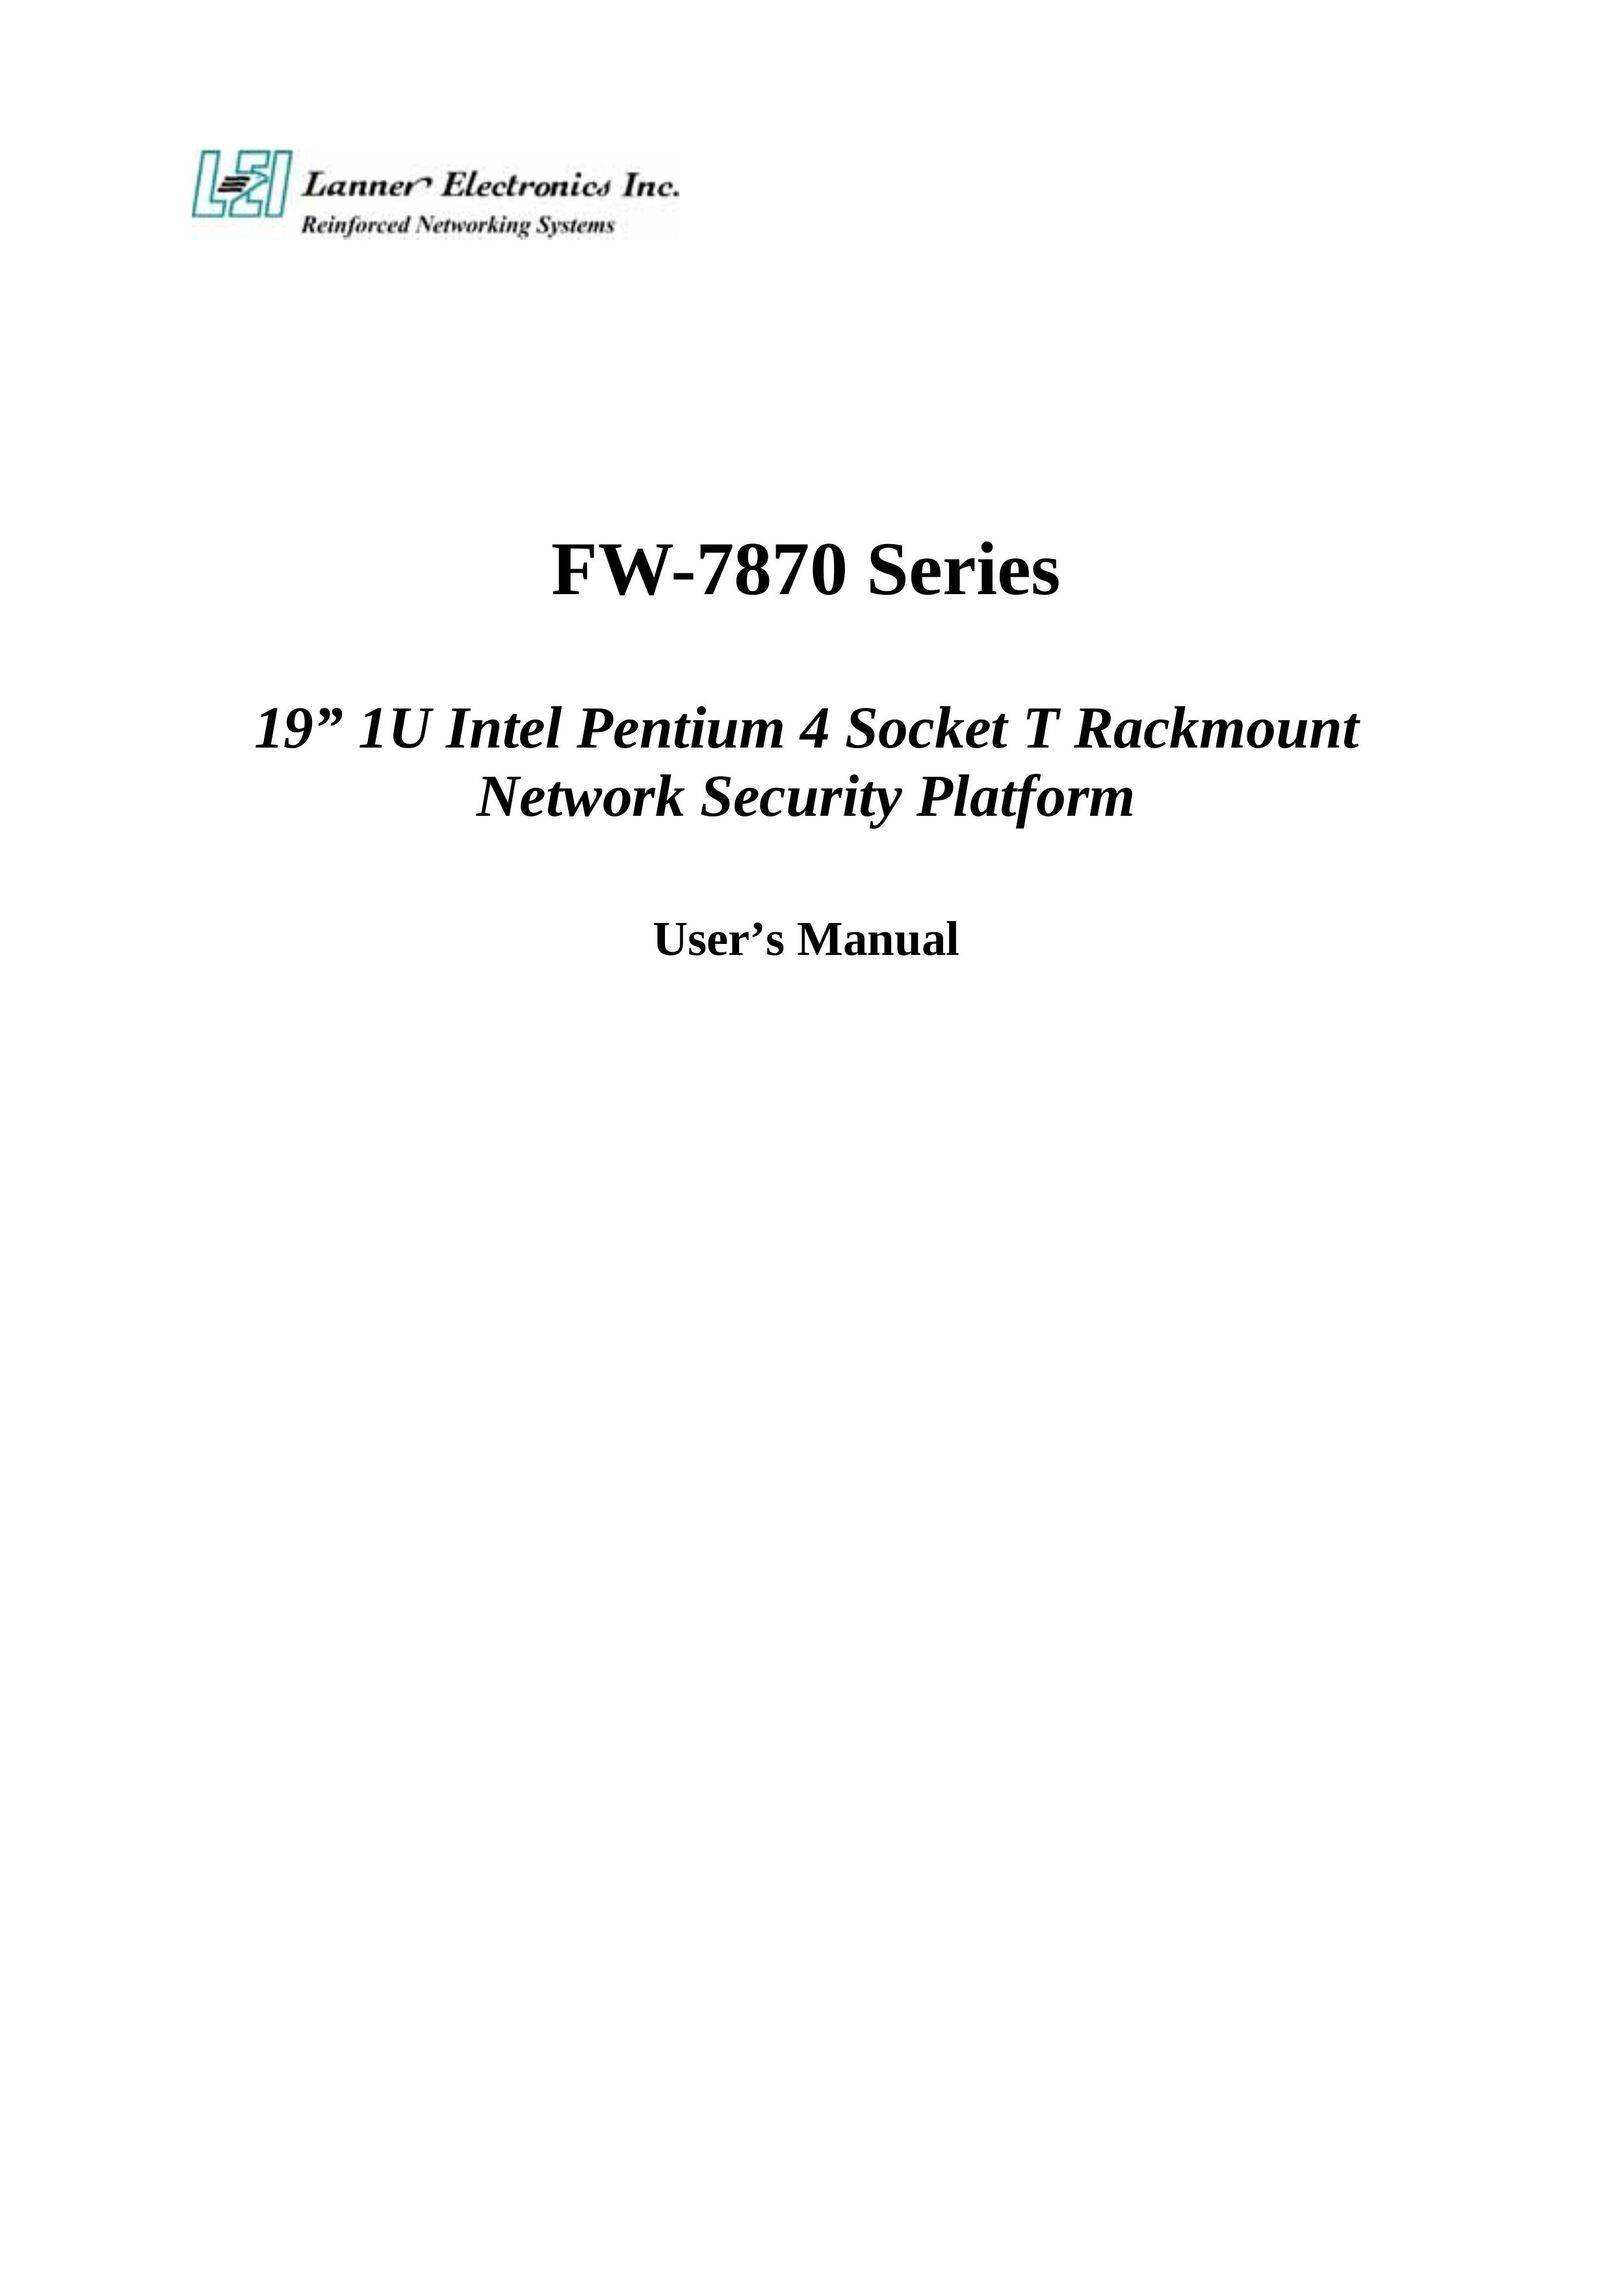 Lanner electronic FW-7870 Network Hardware User Manual